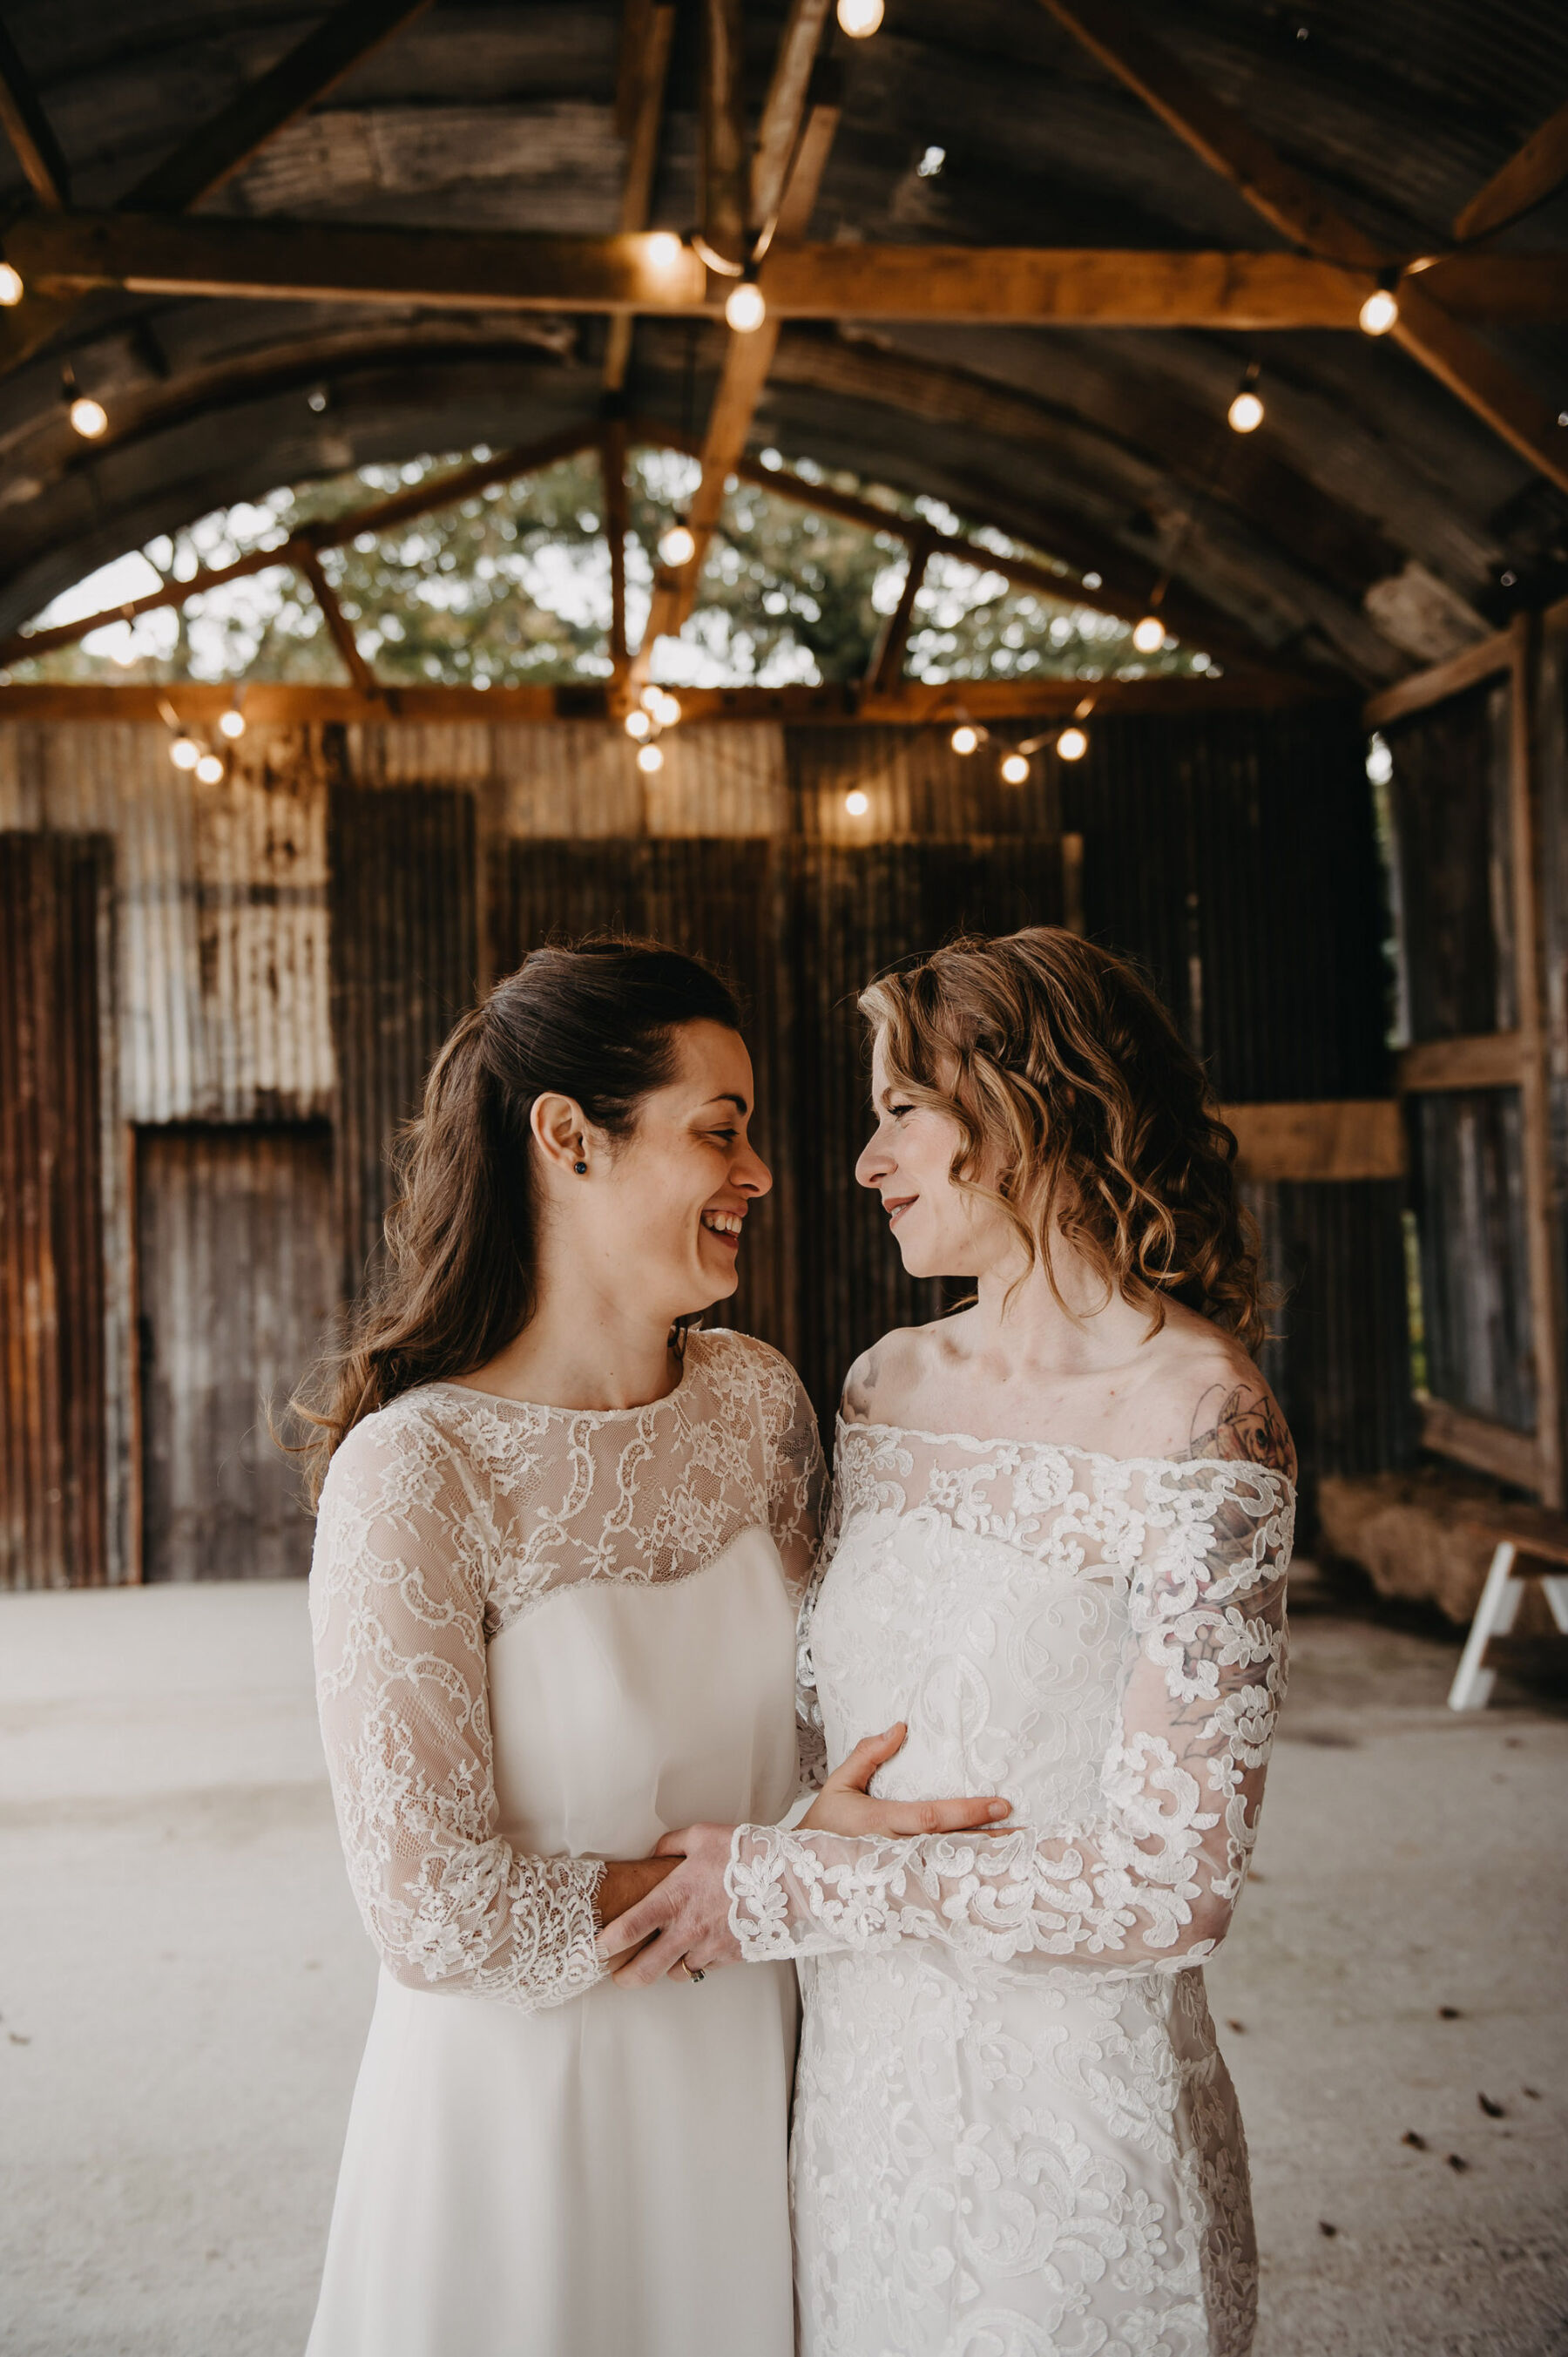 Brides embracing at LGBTQ+ Wedding, Silchester Farm barn venue. Jessica Grace Photography.